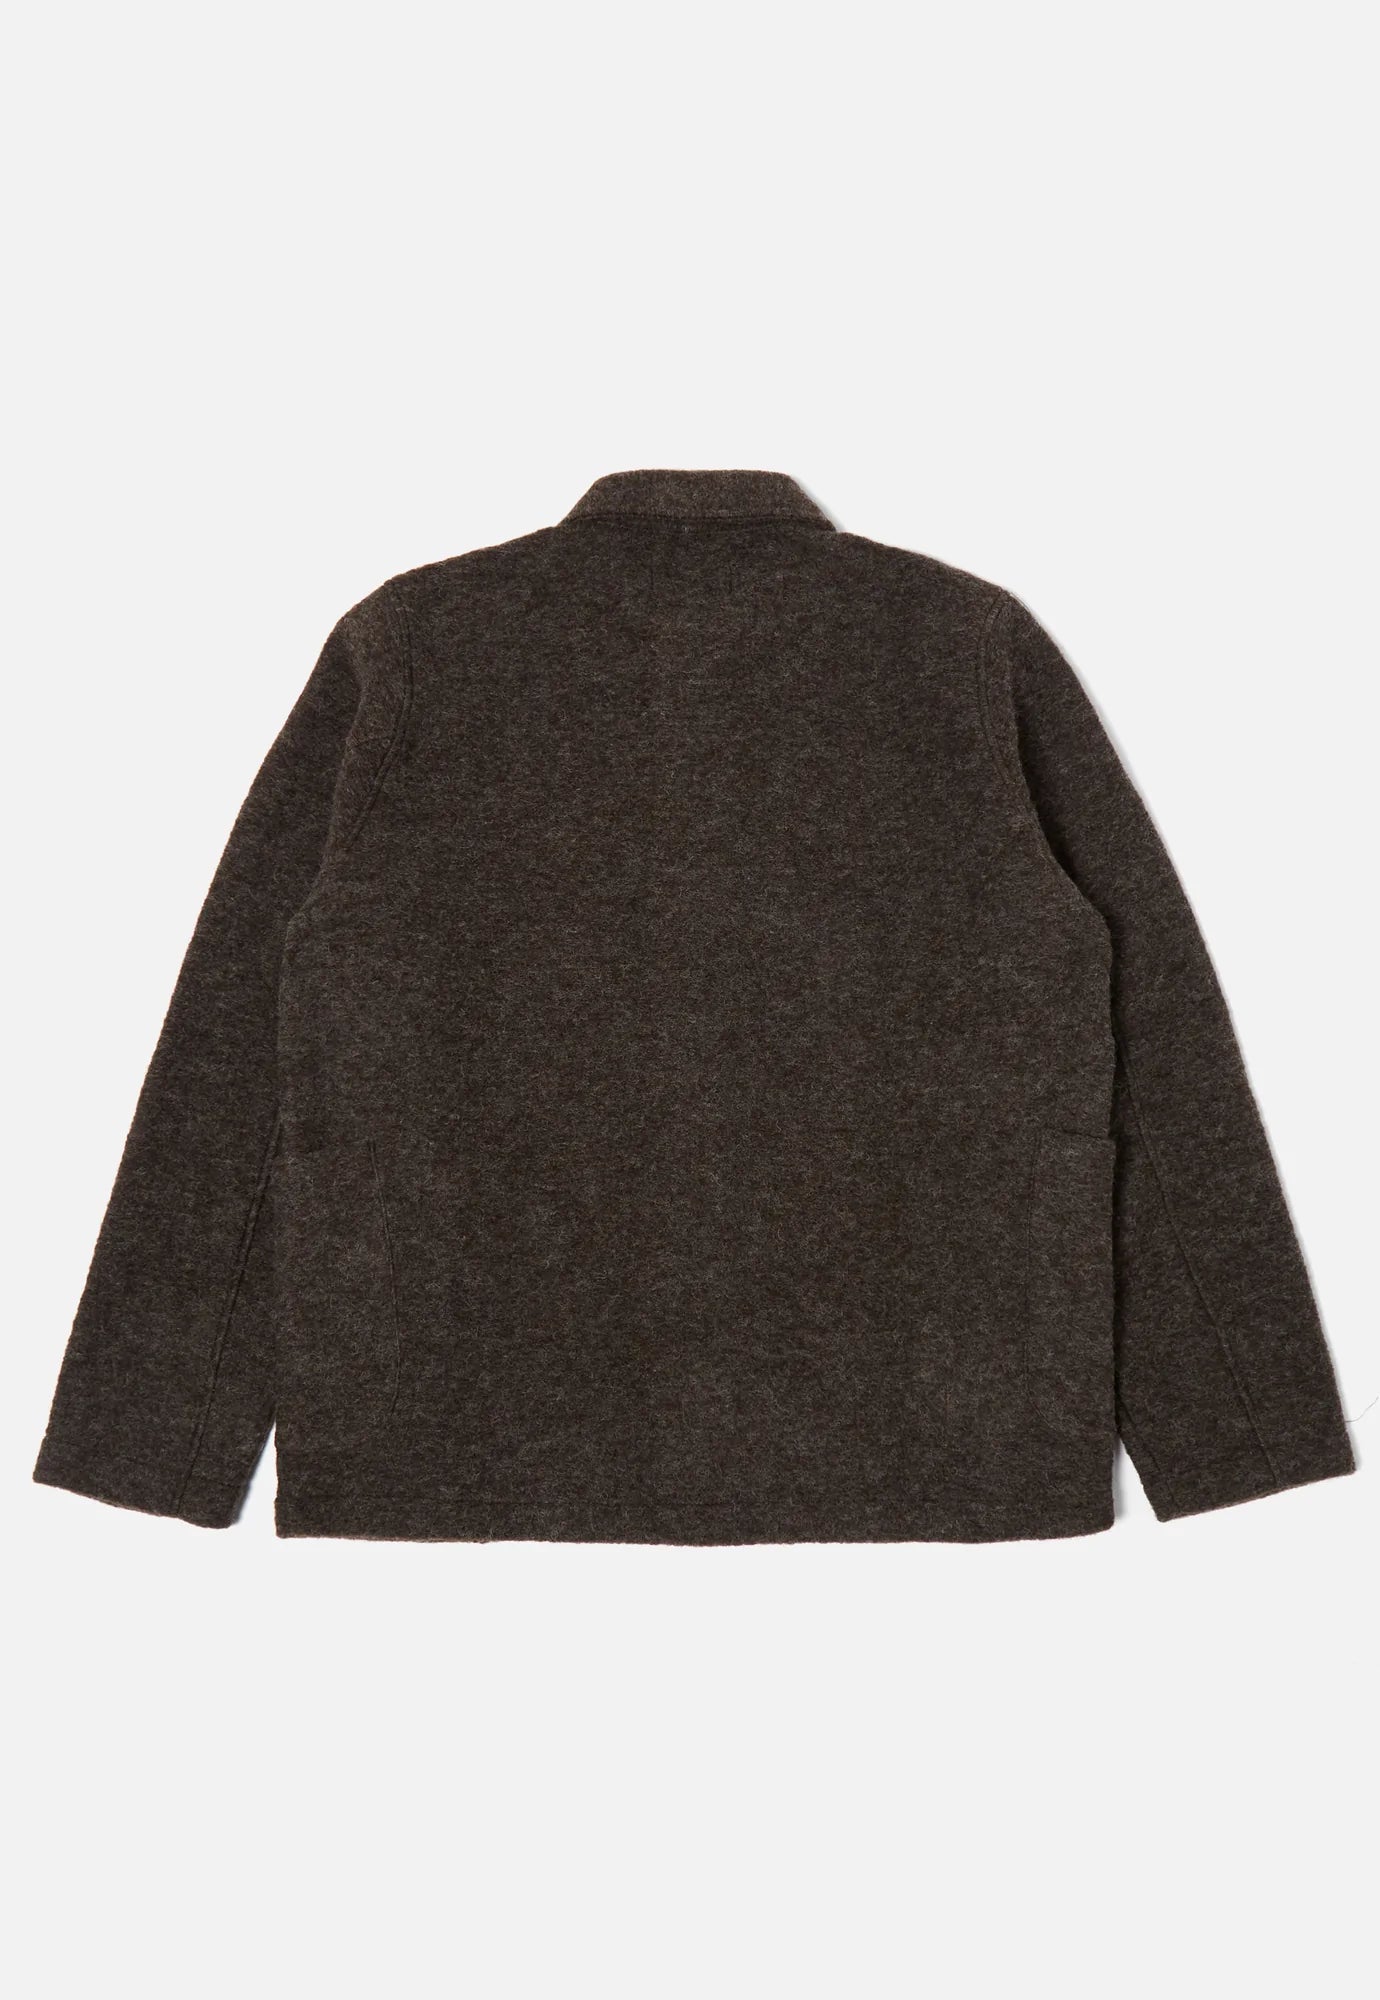 
                  
                    Lumber Jacket - Brown Wool Fleece
                  
                